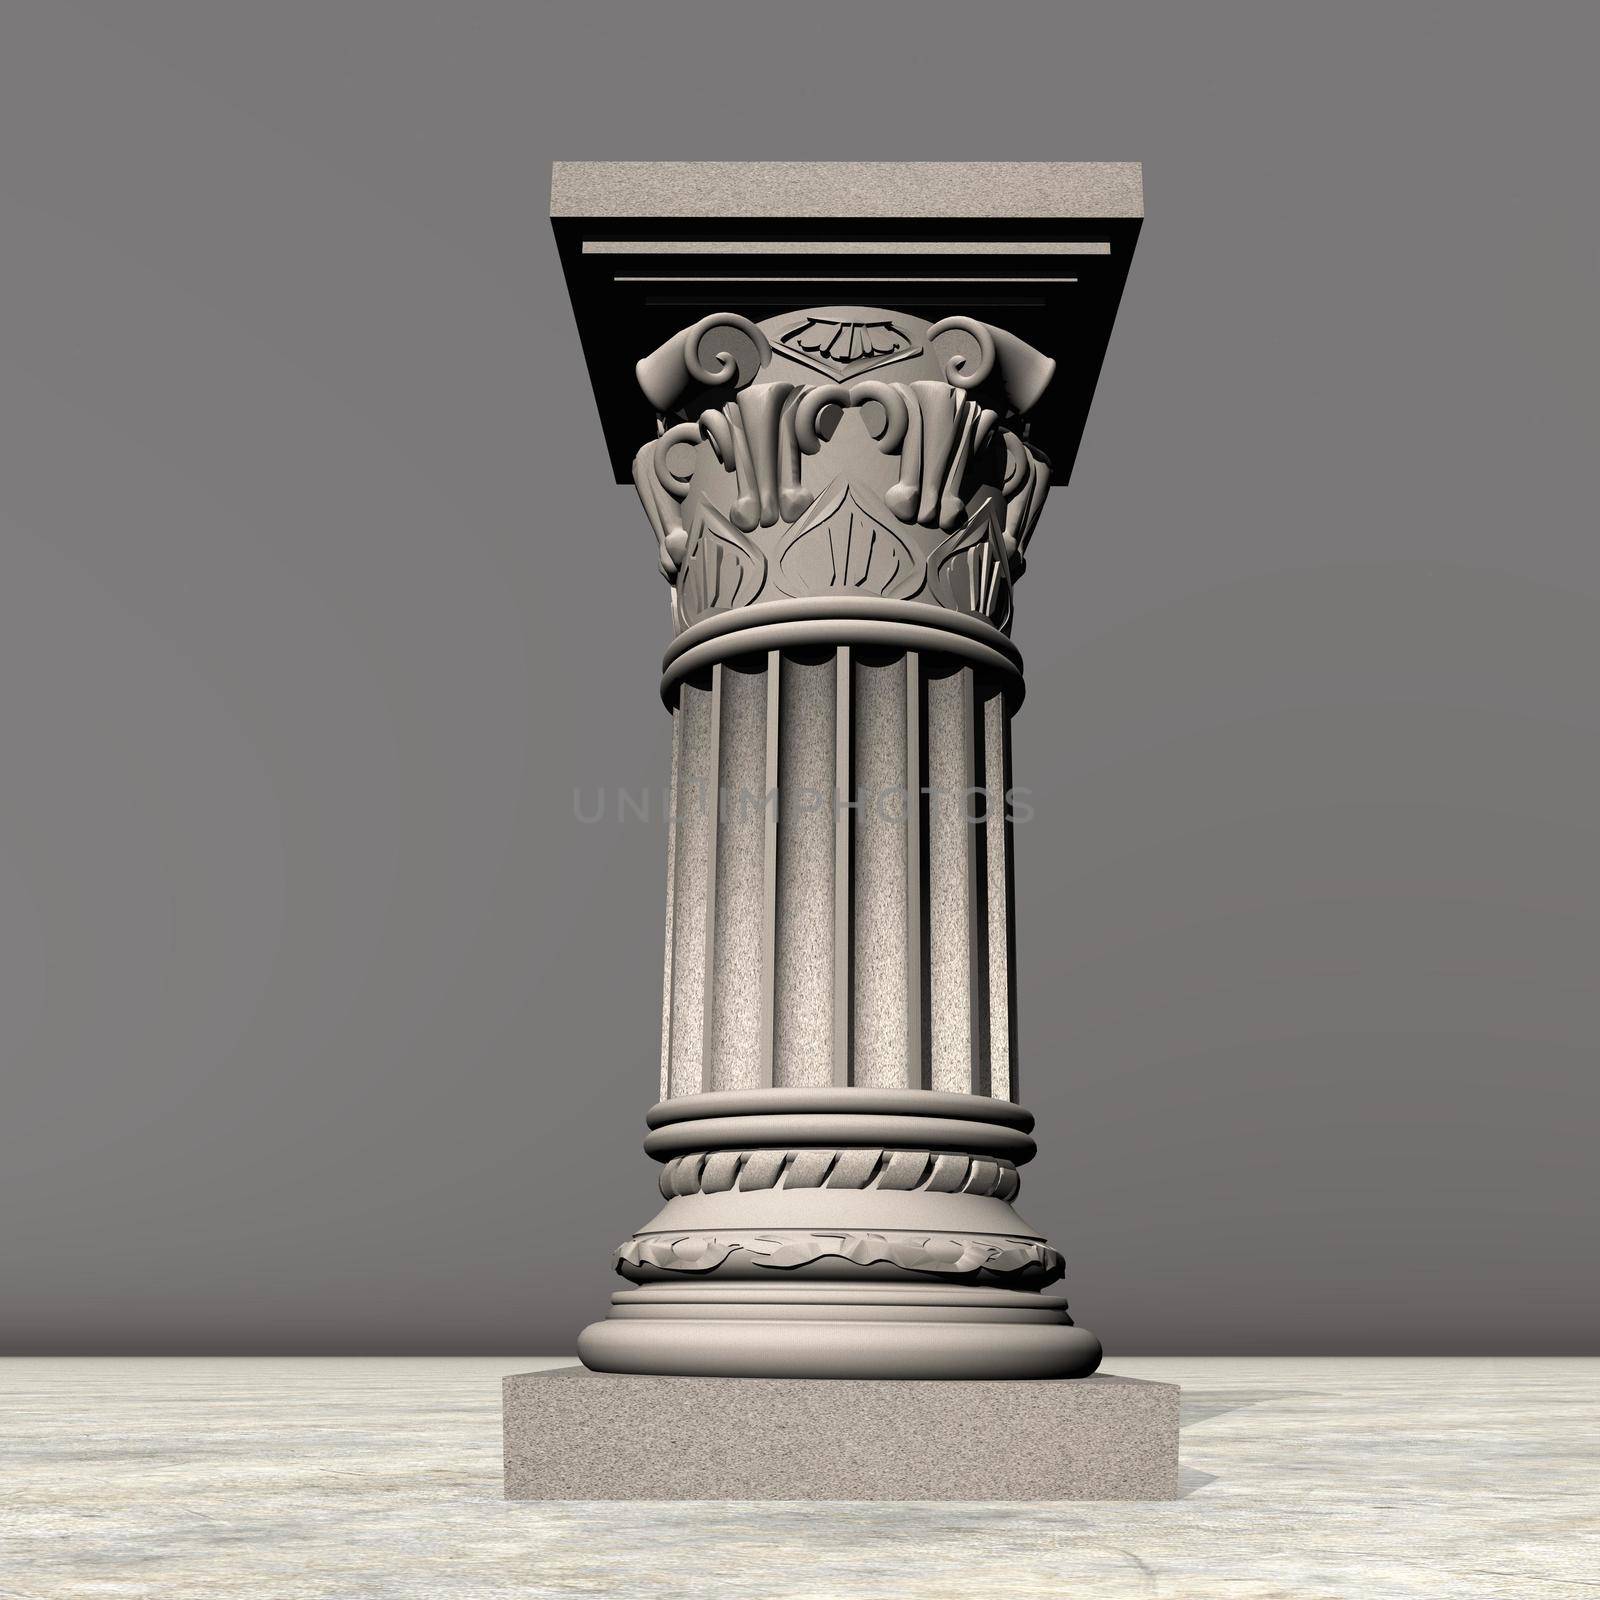 One stone column or pillar in grey background